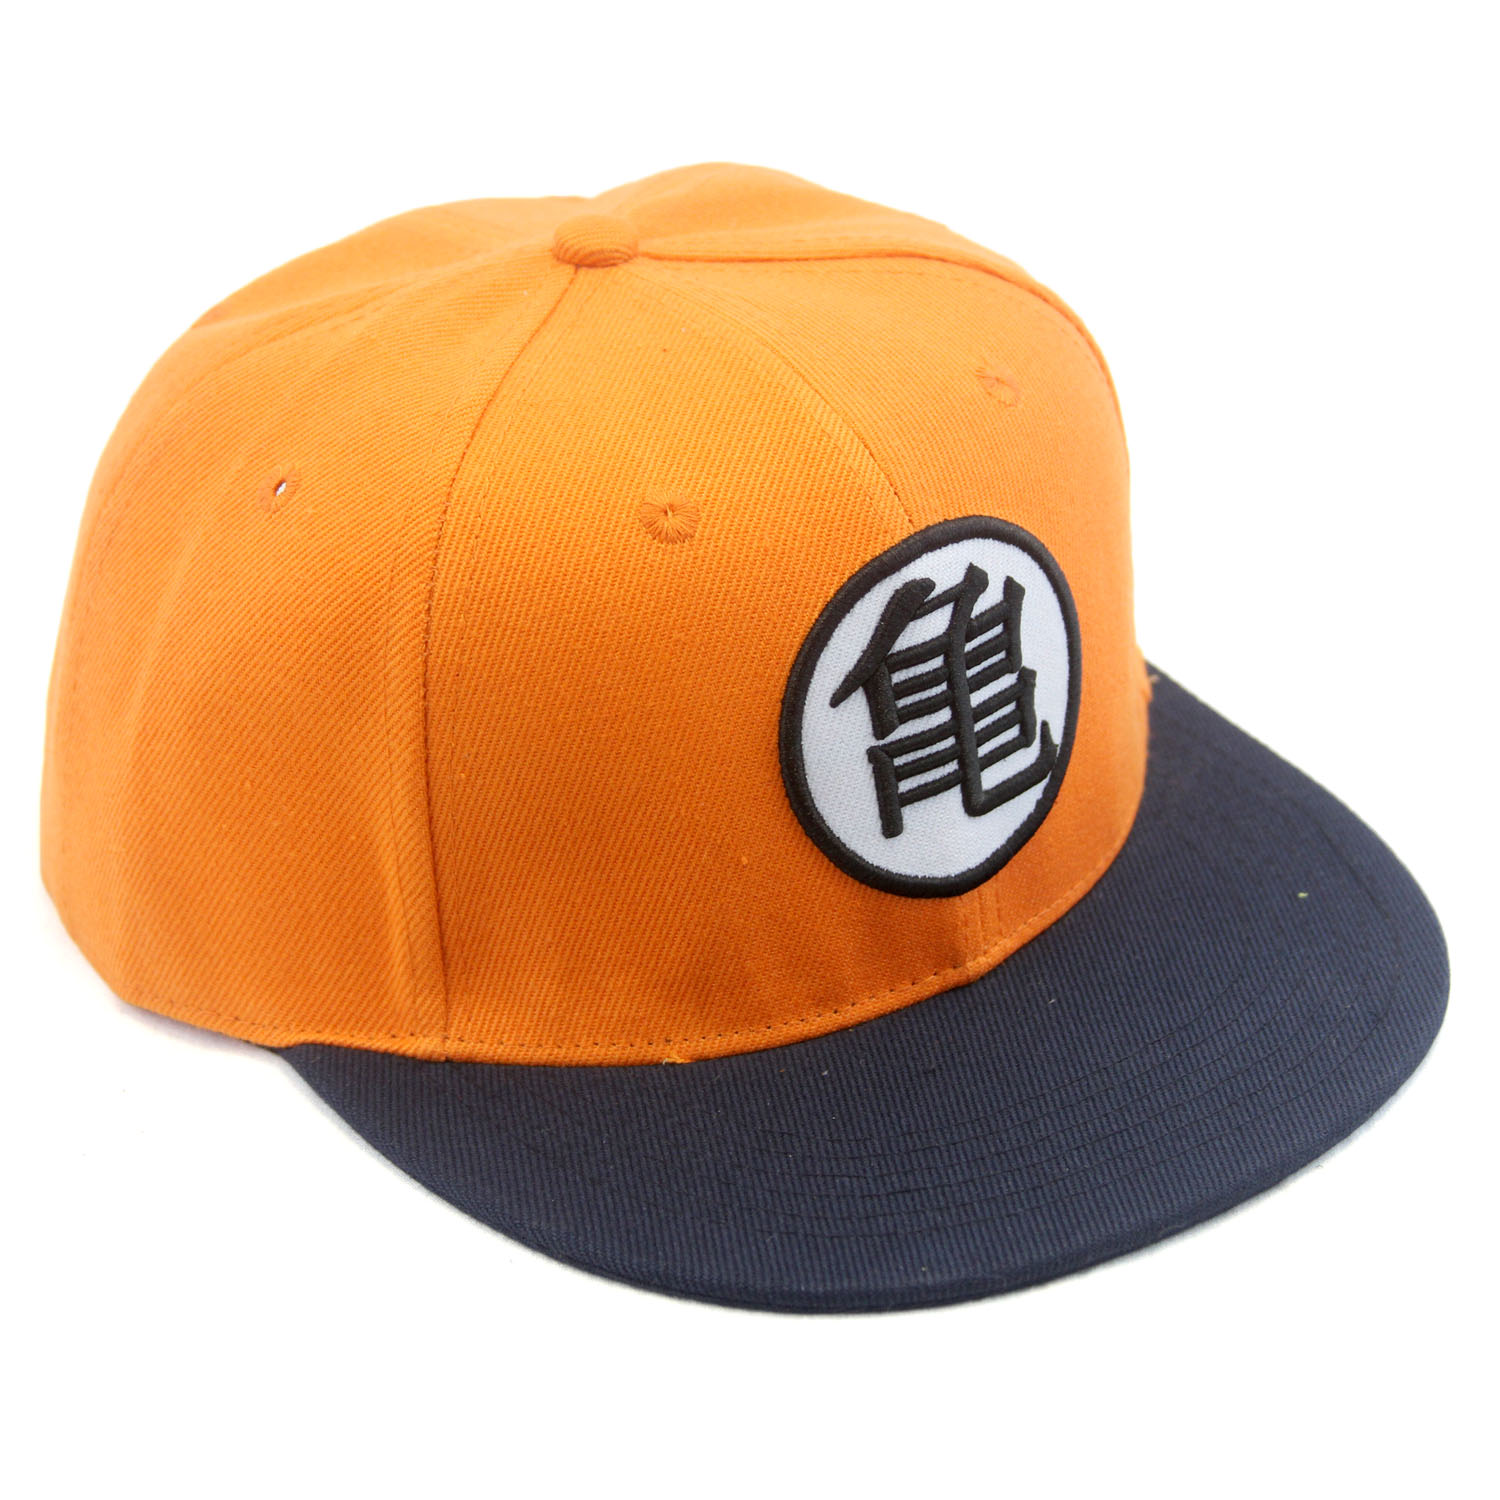 Master Roshi Kame Turtle Symbol Baseball Cap - Dragon Ball Z New (Snapback Hat) 30656846165 | eBay